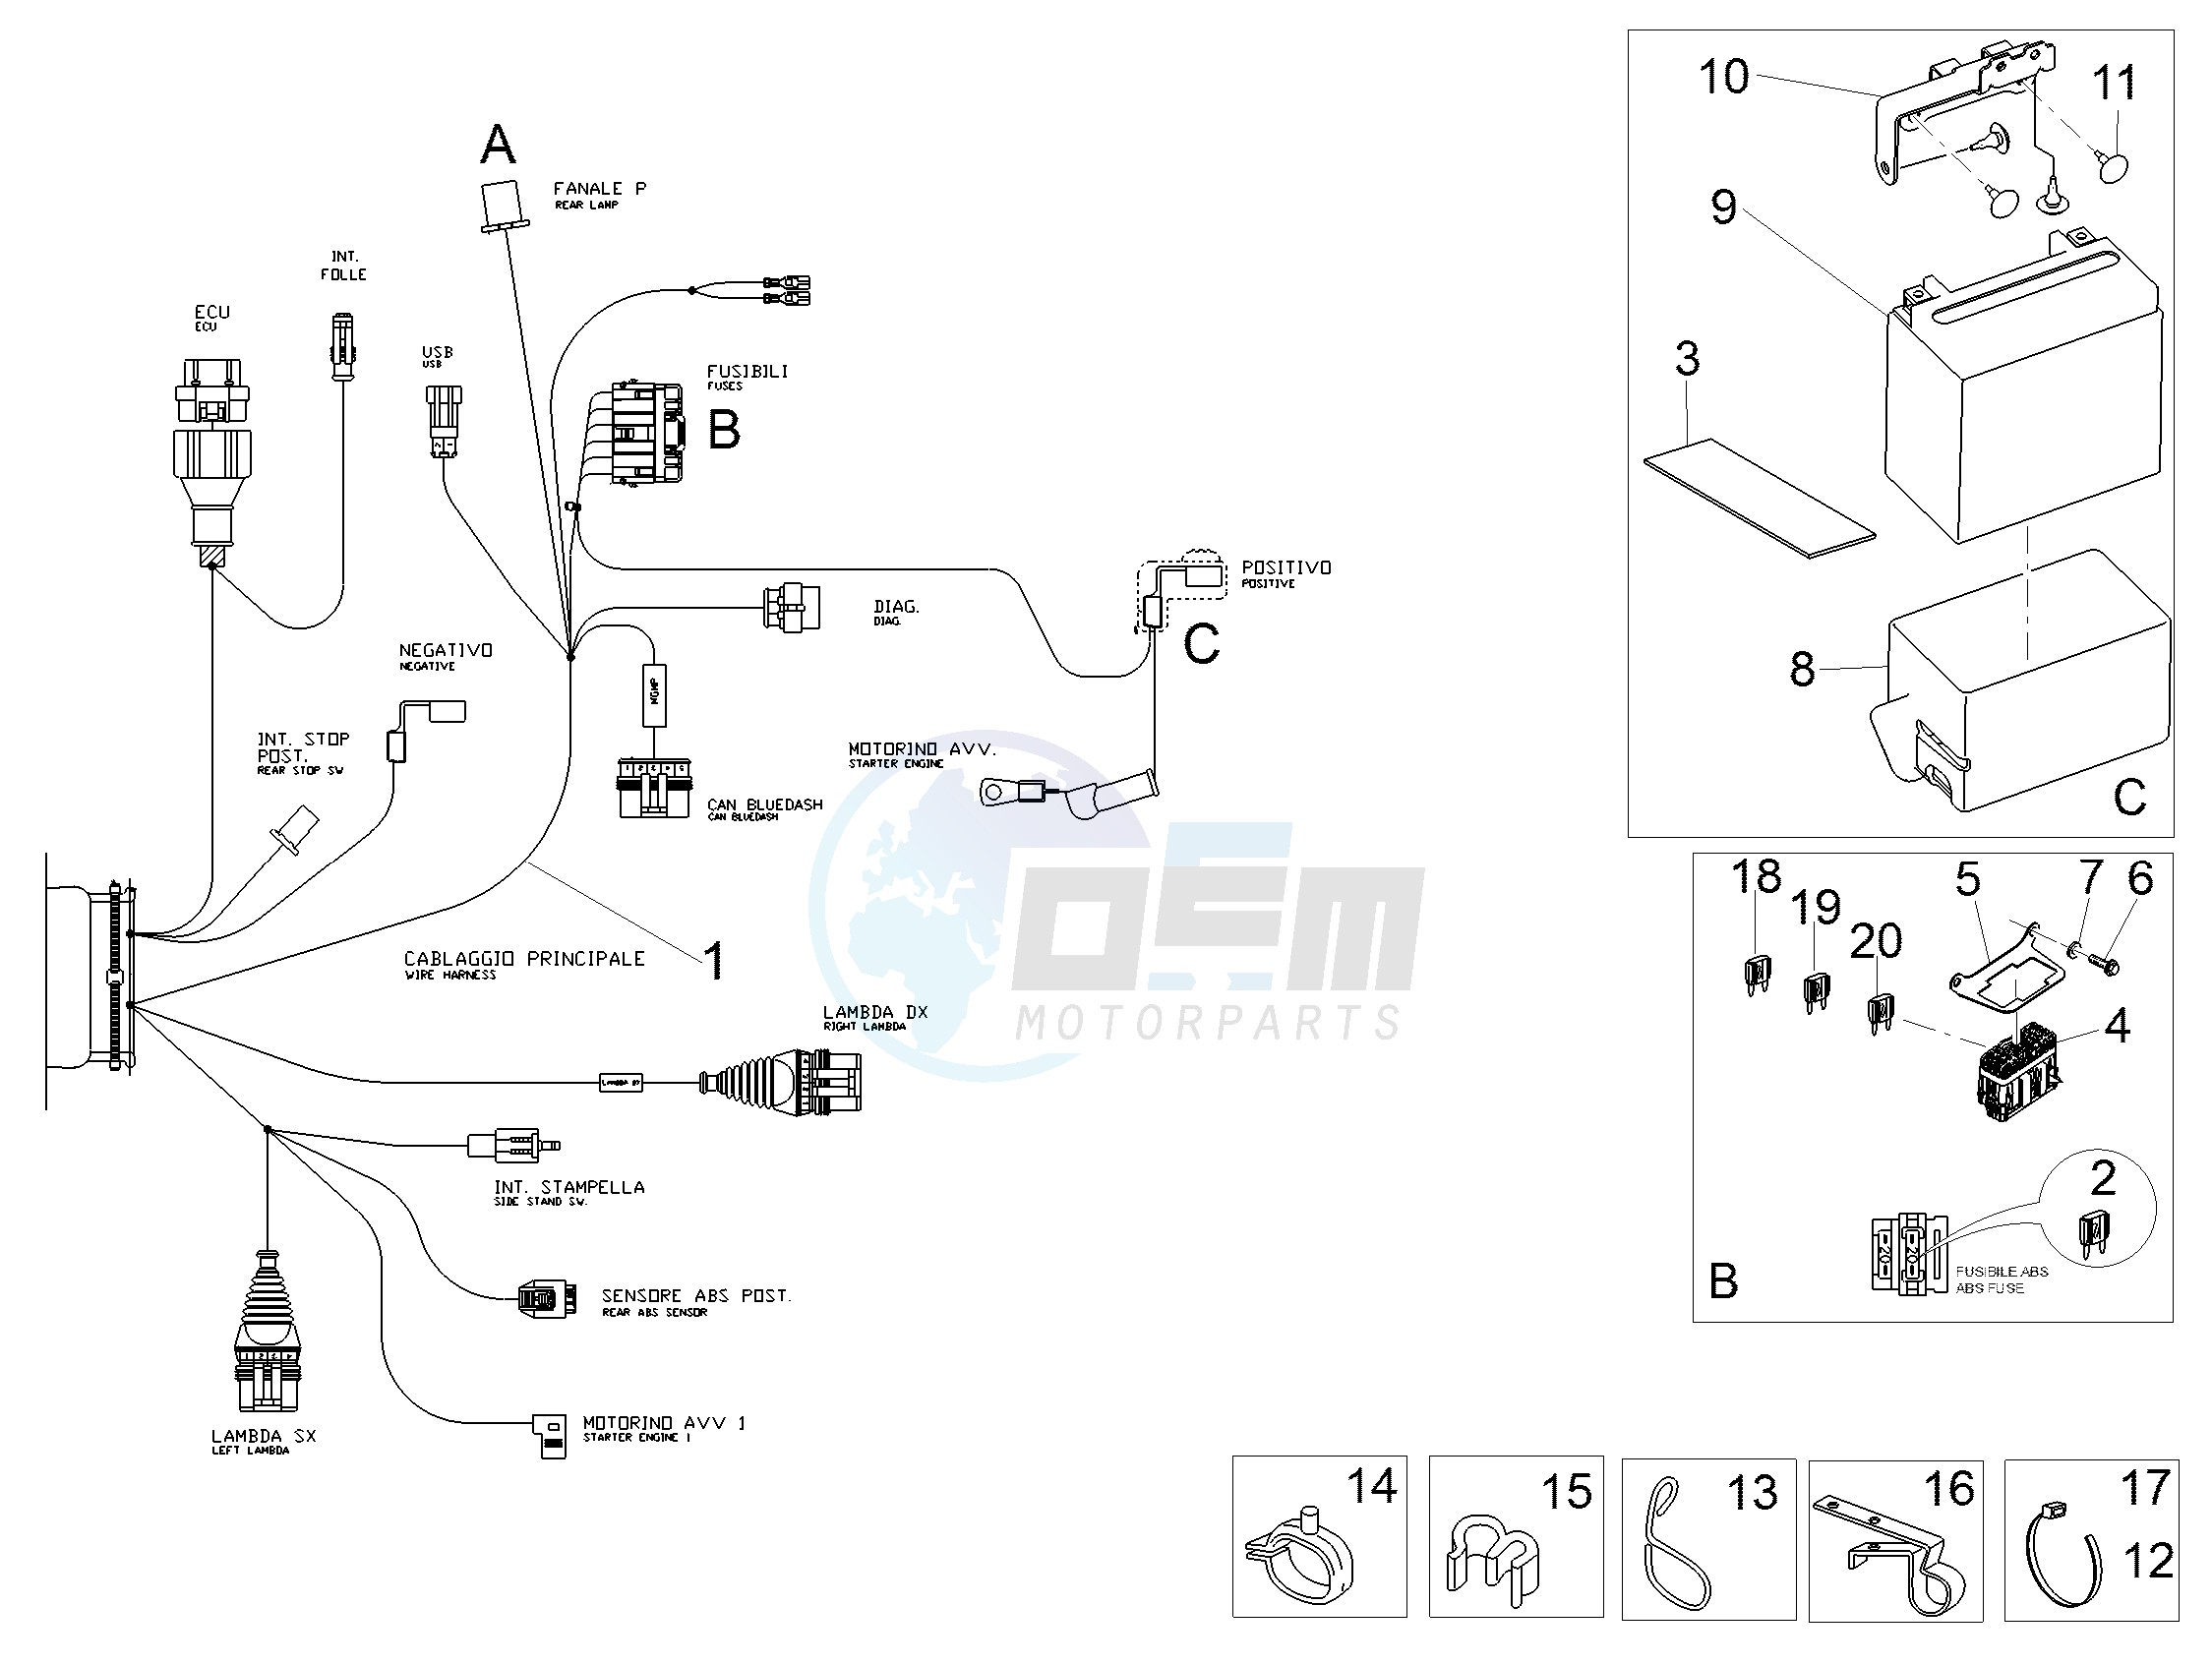 Rear electrical system blueprint